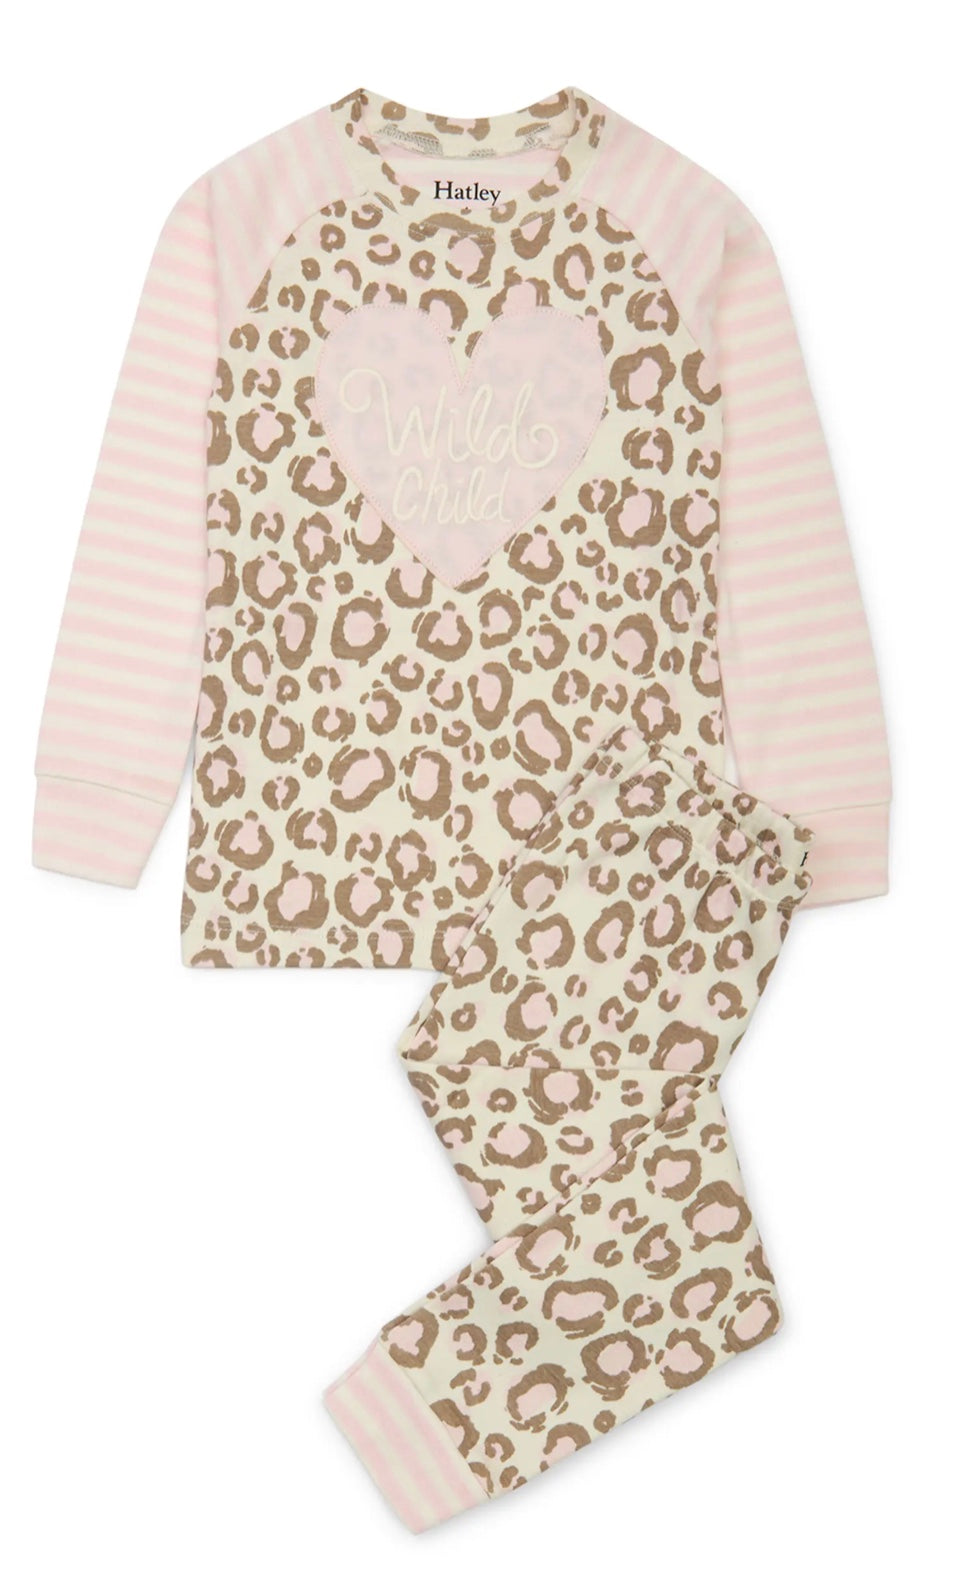 Wild child leopard 2-piece pyjama set